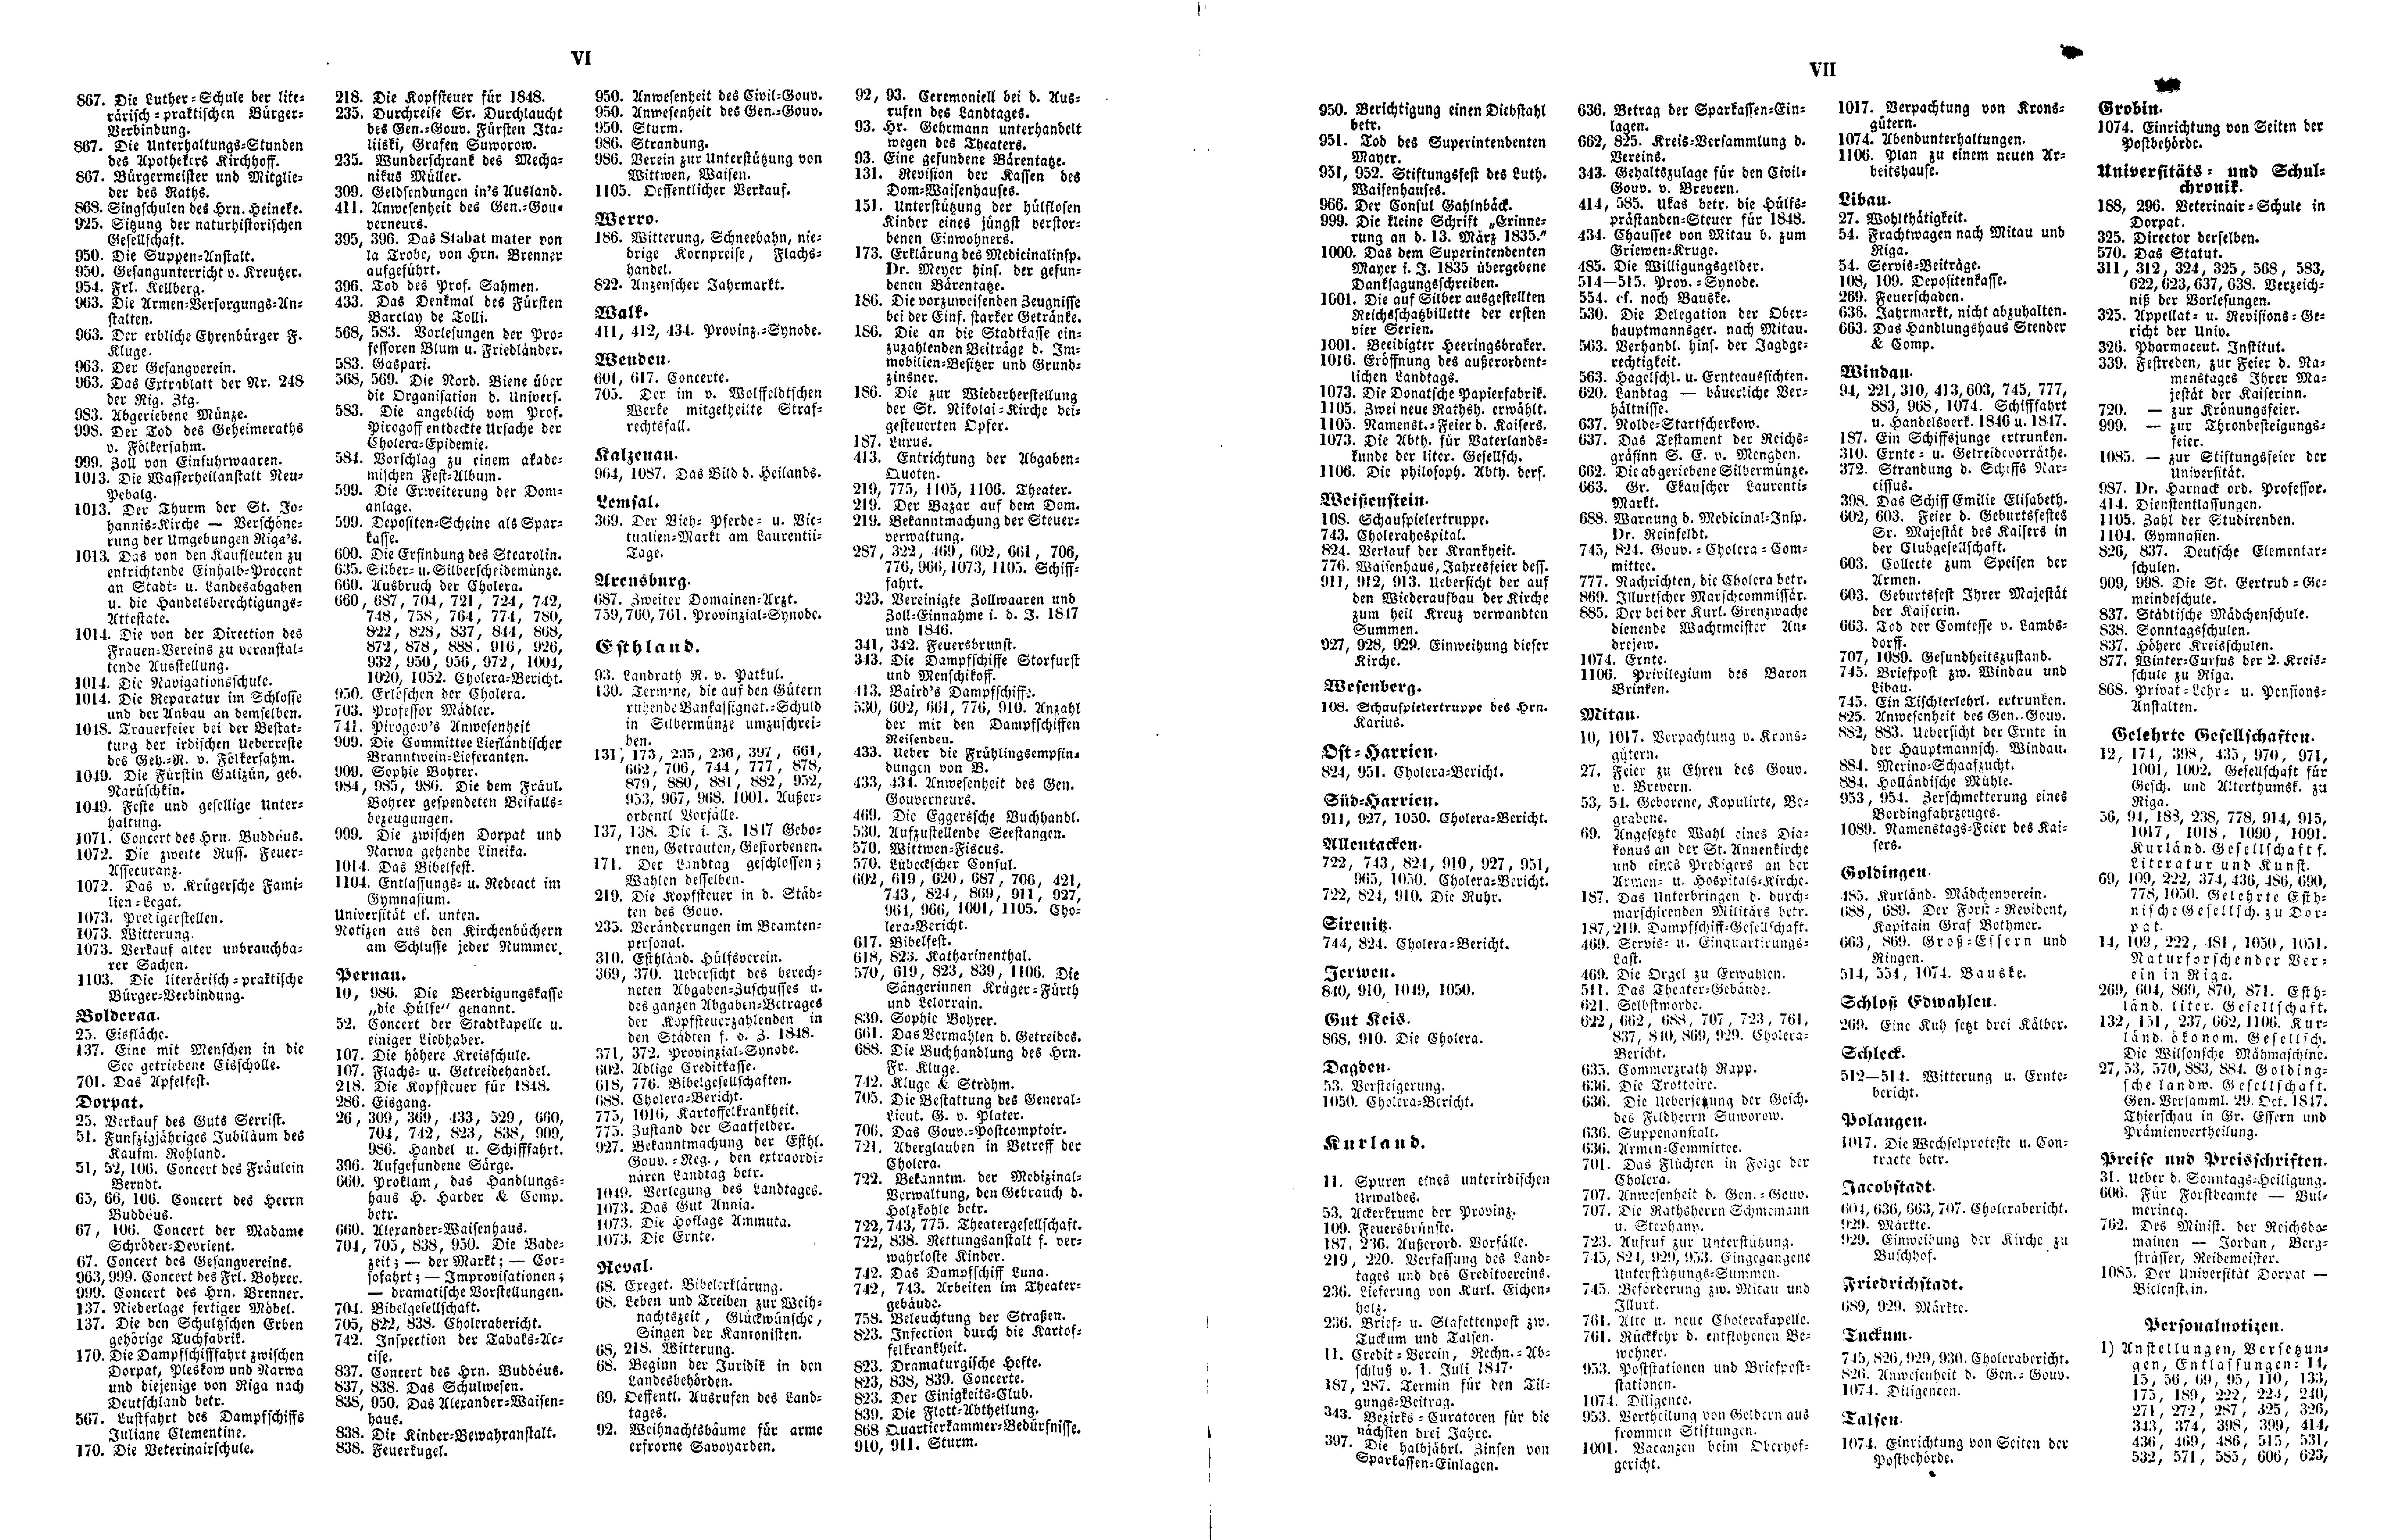 Das Inland [13] (1848) | 4. (VI-VII) Register